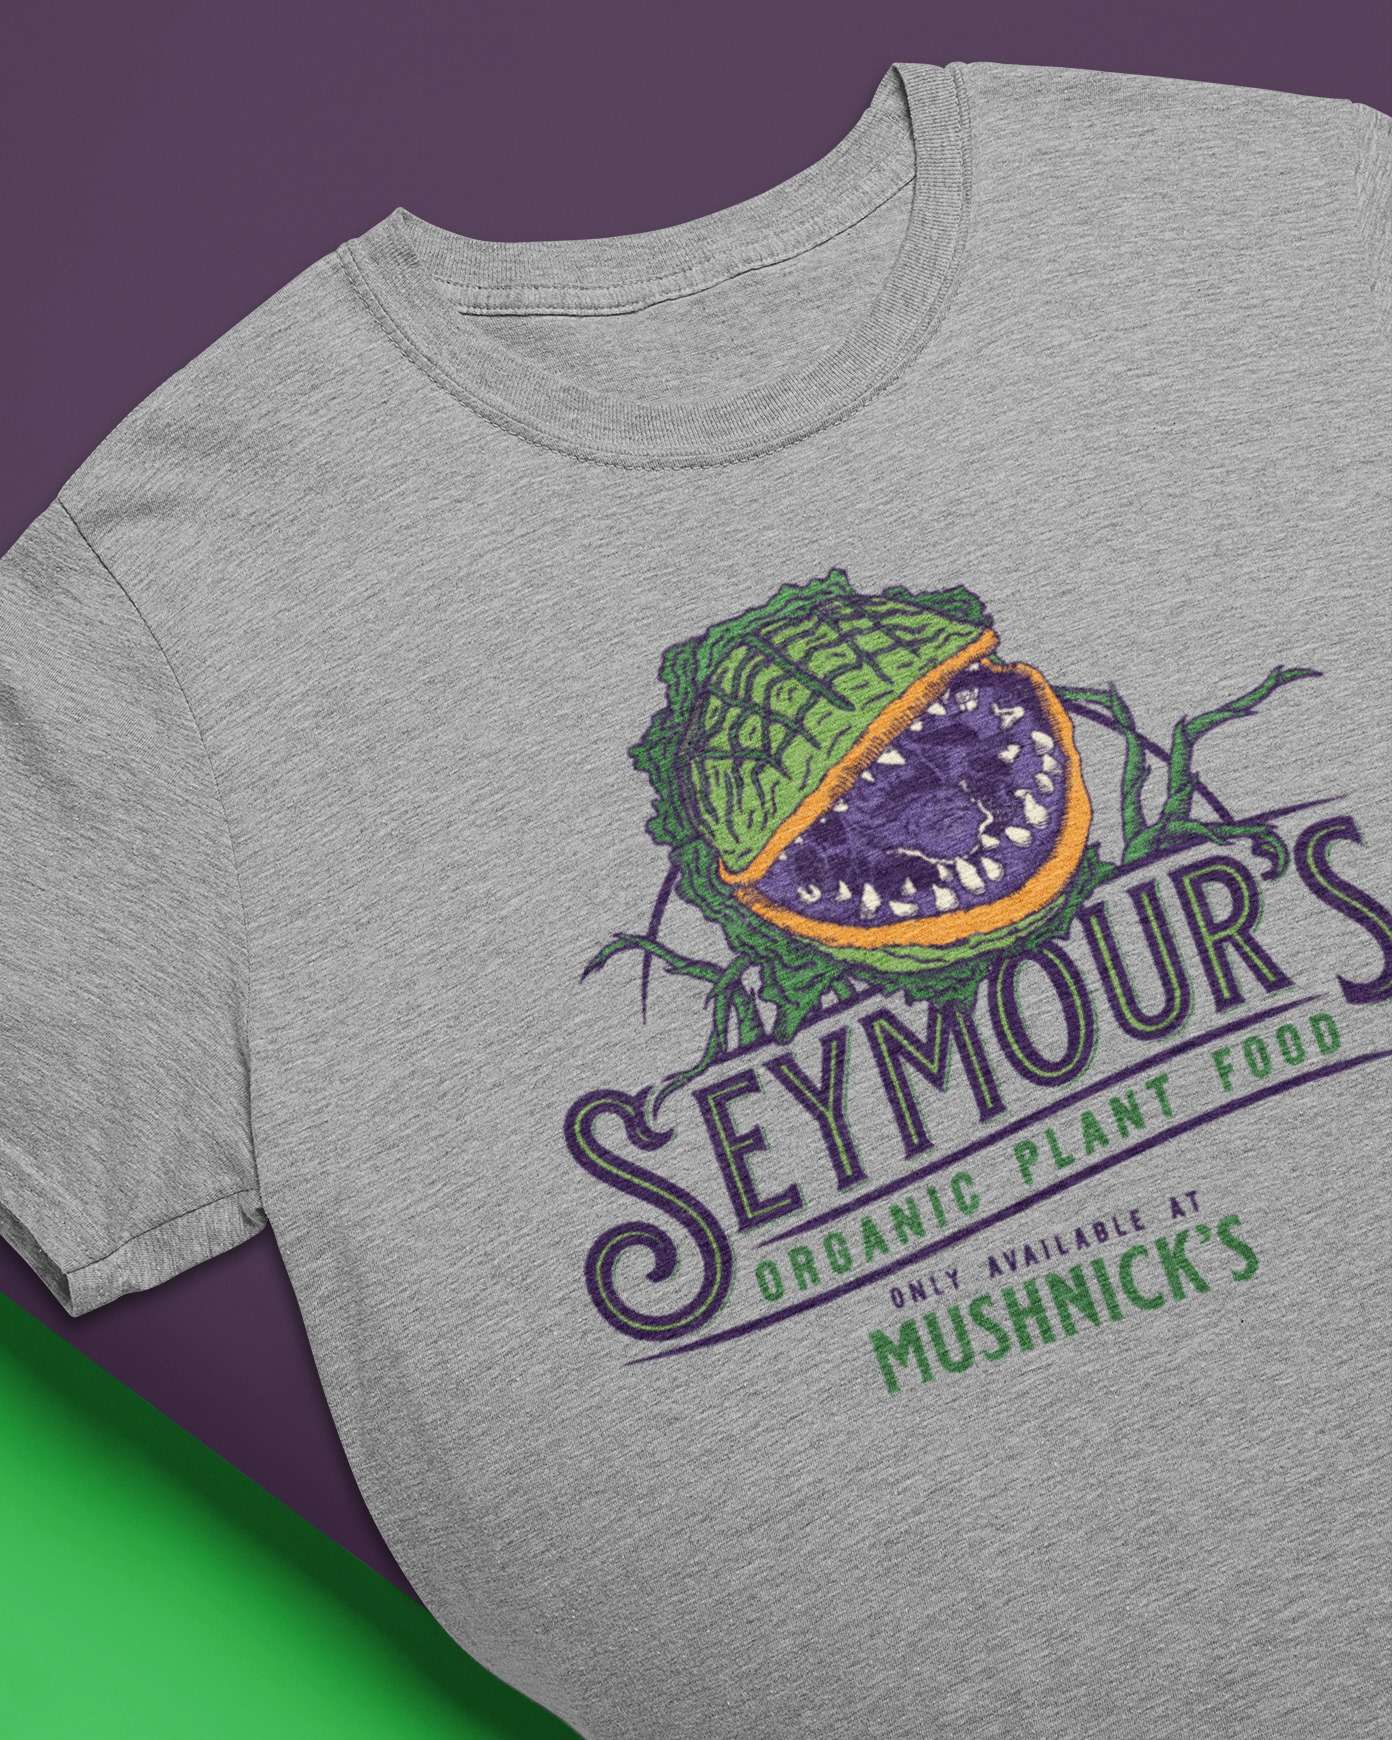 Seymour's organic plant food - Carnivorous plant, organic plant T-shirt